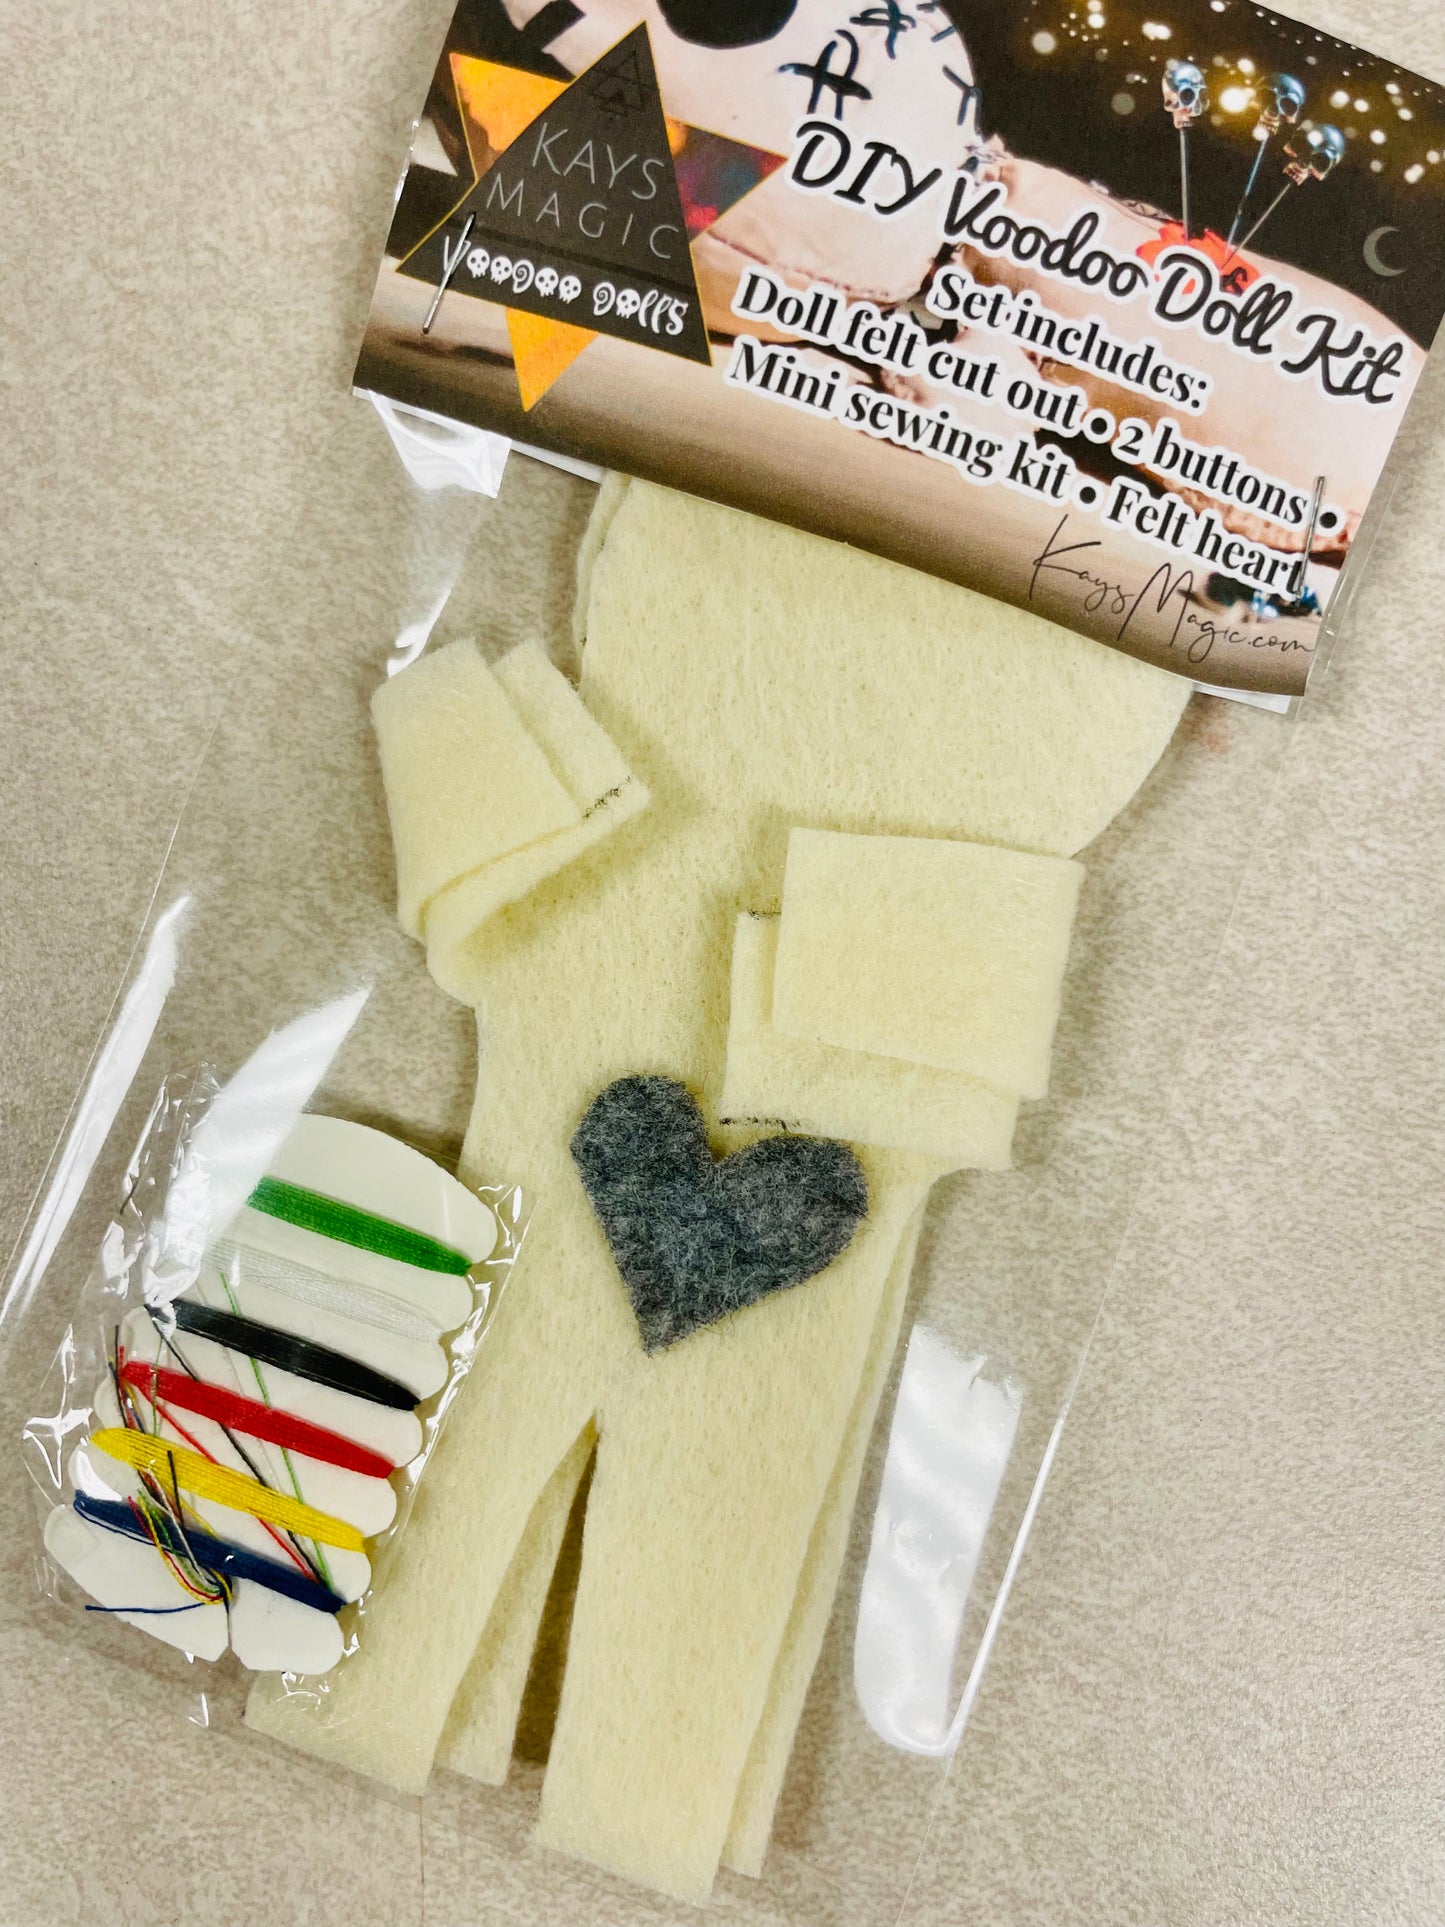 DIY Voodoo Doll Making Kit, Cream